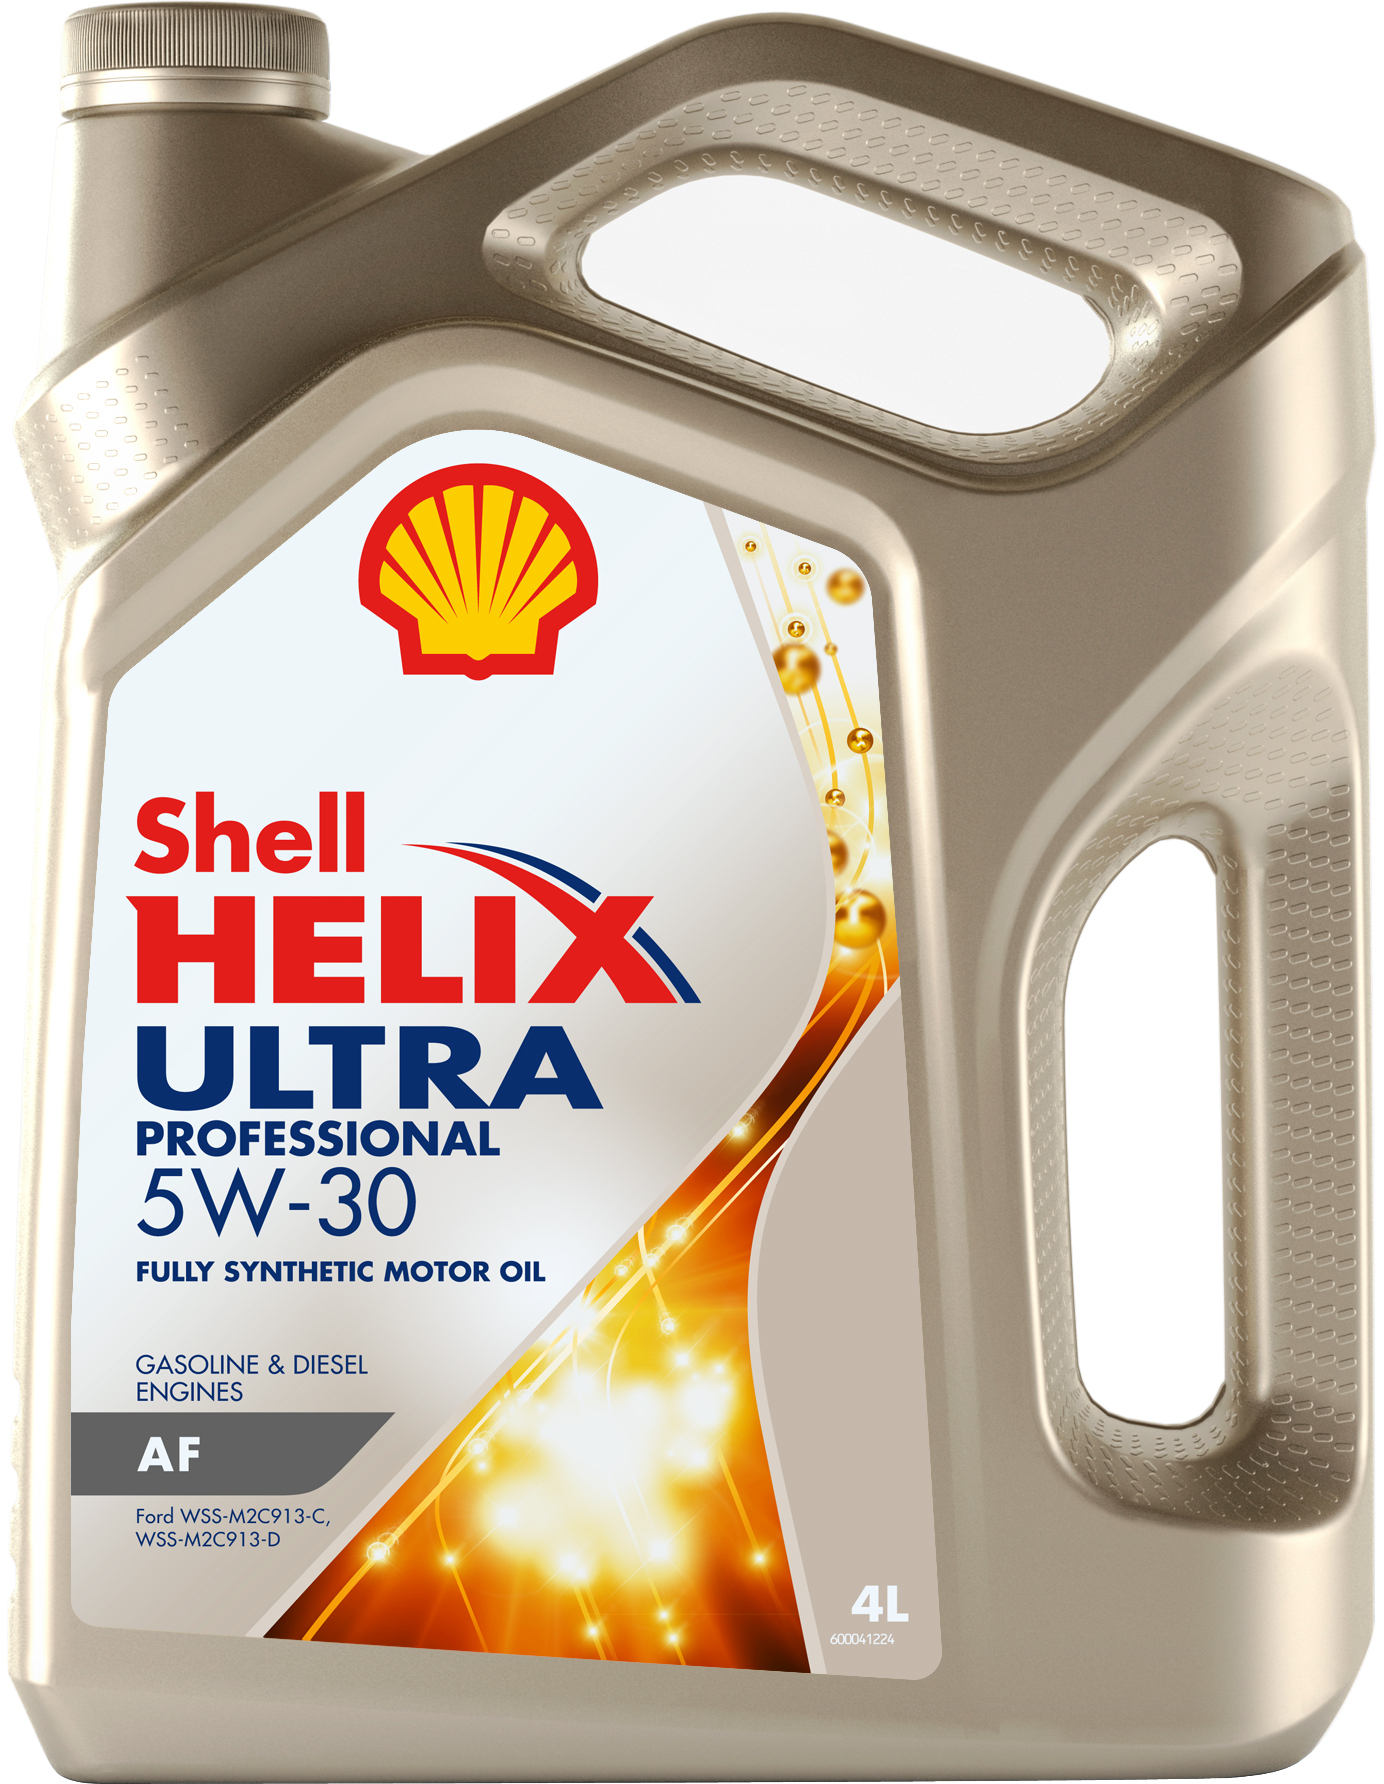 Моторное масло Shell Helix Professional AF 5W30, 550048695, 4л